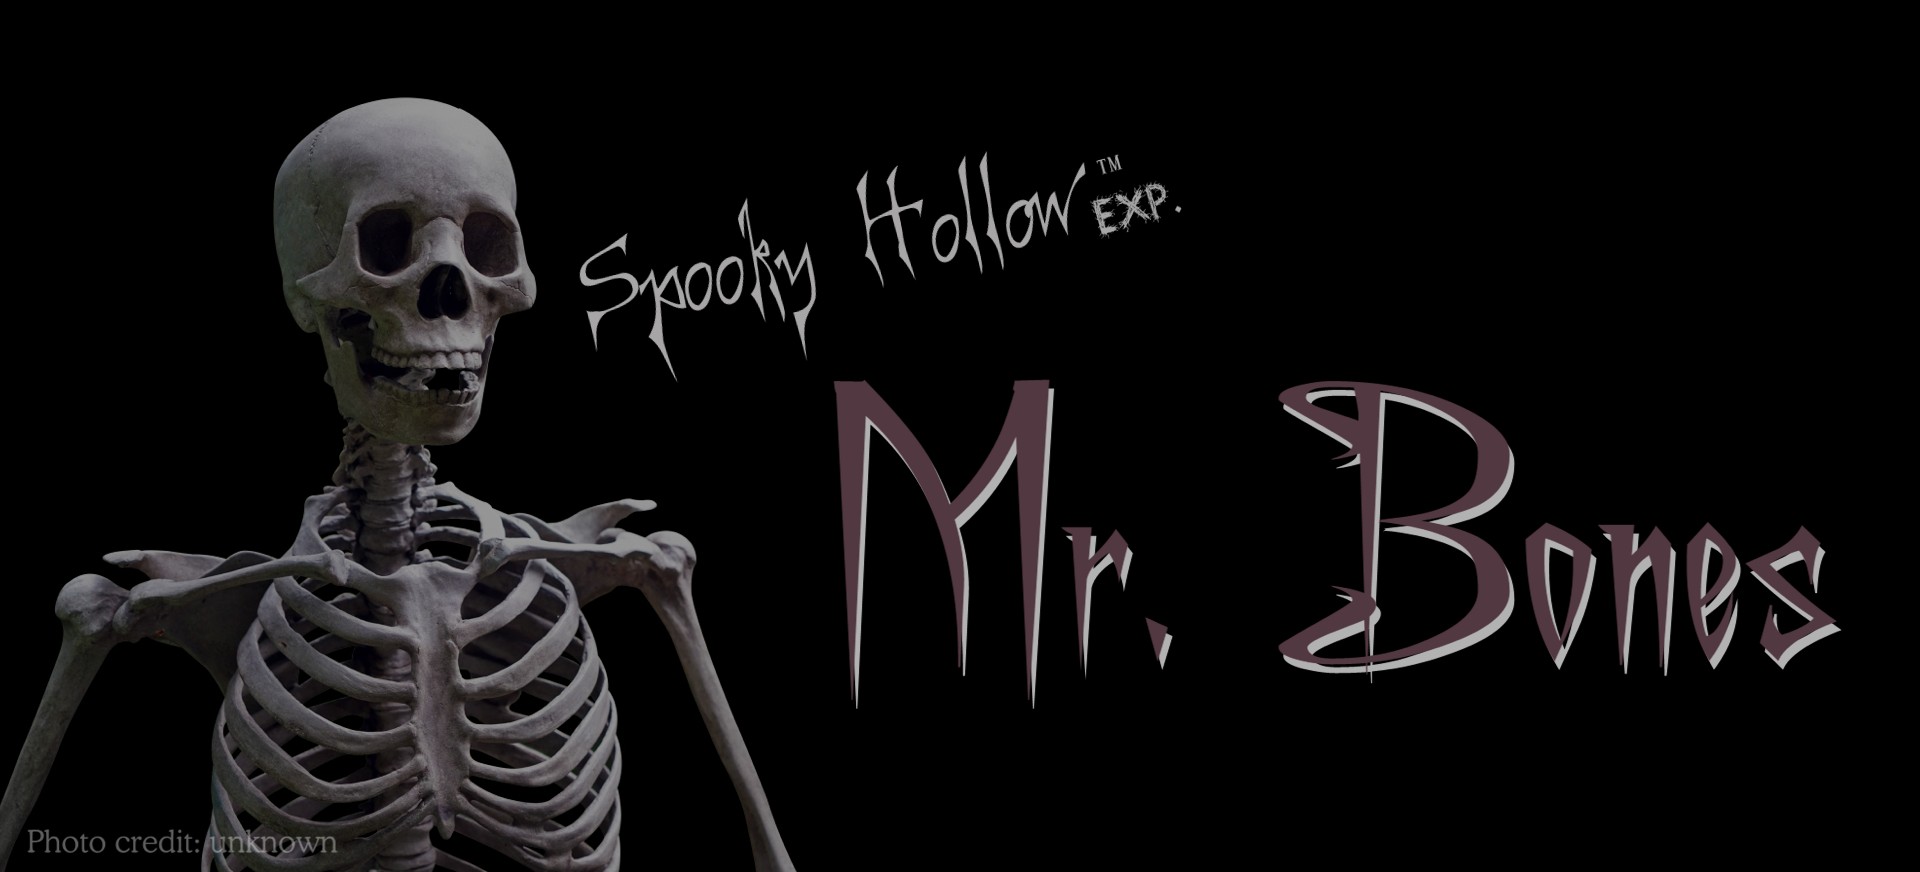 Spooky Hollow Experience Bones